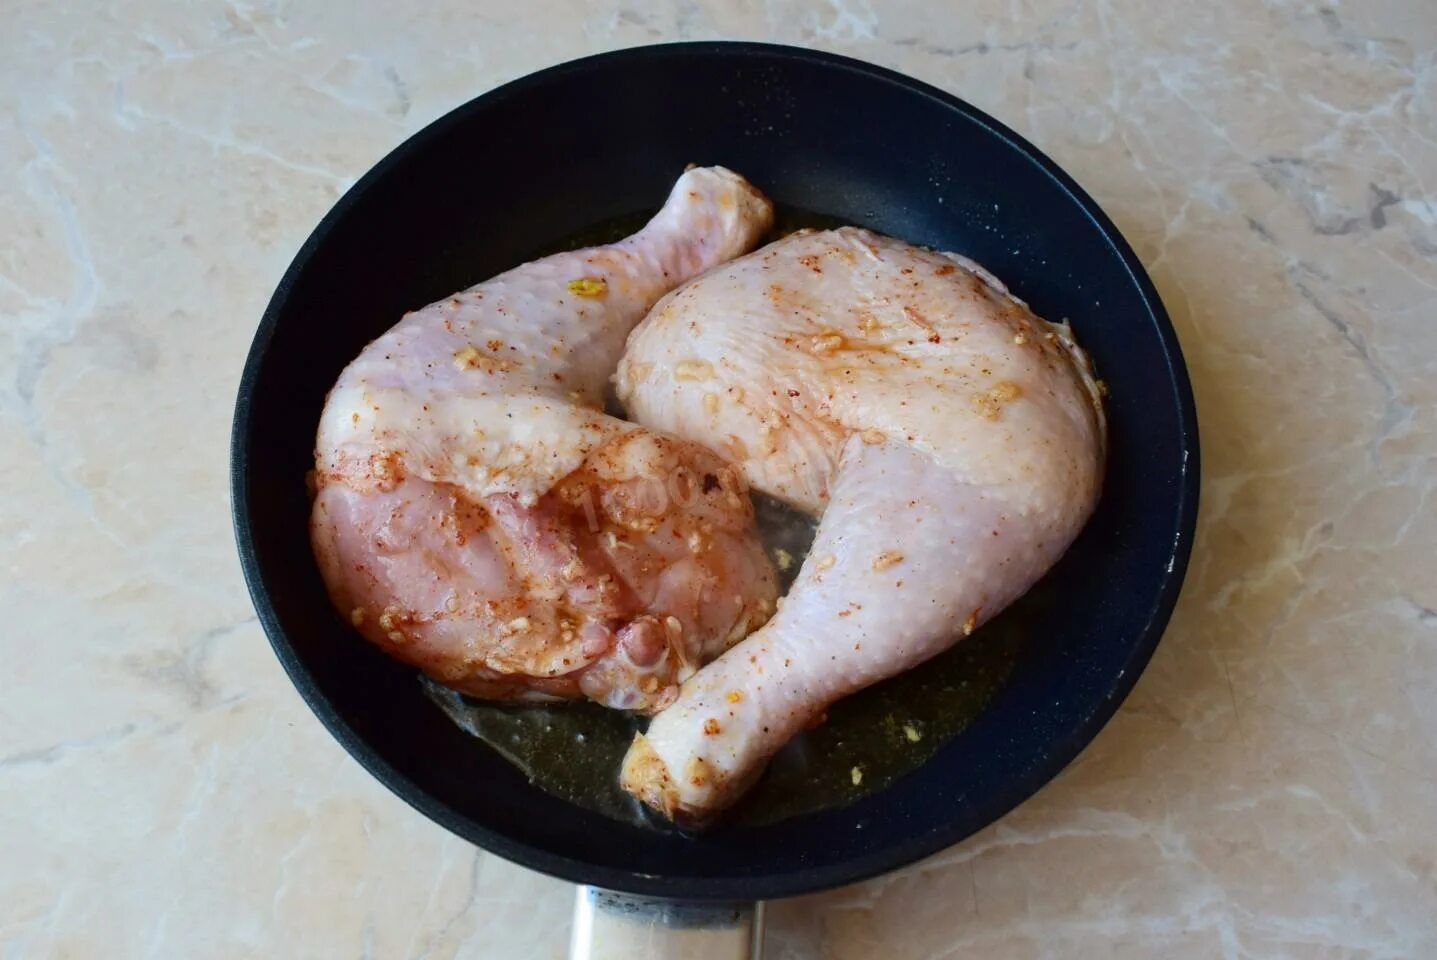 Окорочка на сковороде. Жареные окорочка на сковороде с корочкой. Окорочка куриные. Жареные куриные ножки на сковороде.